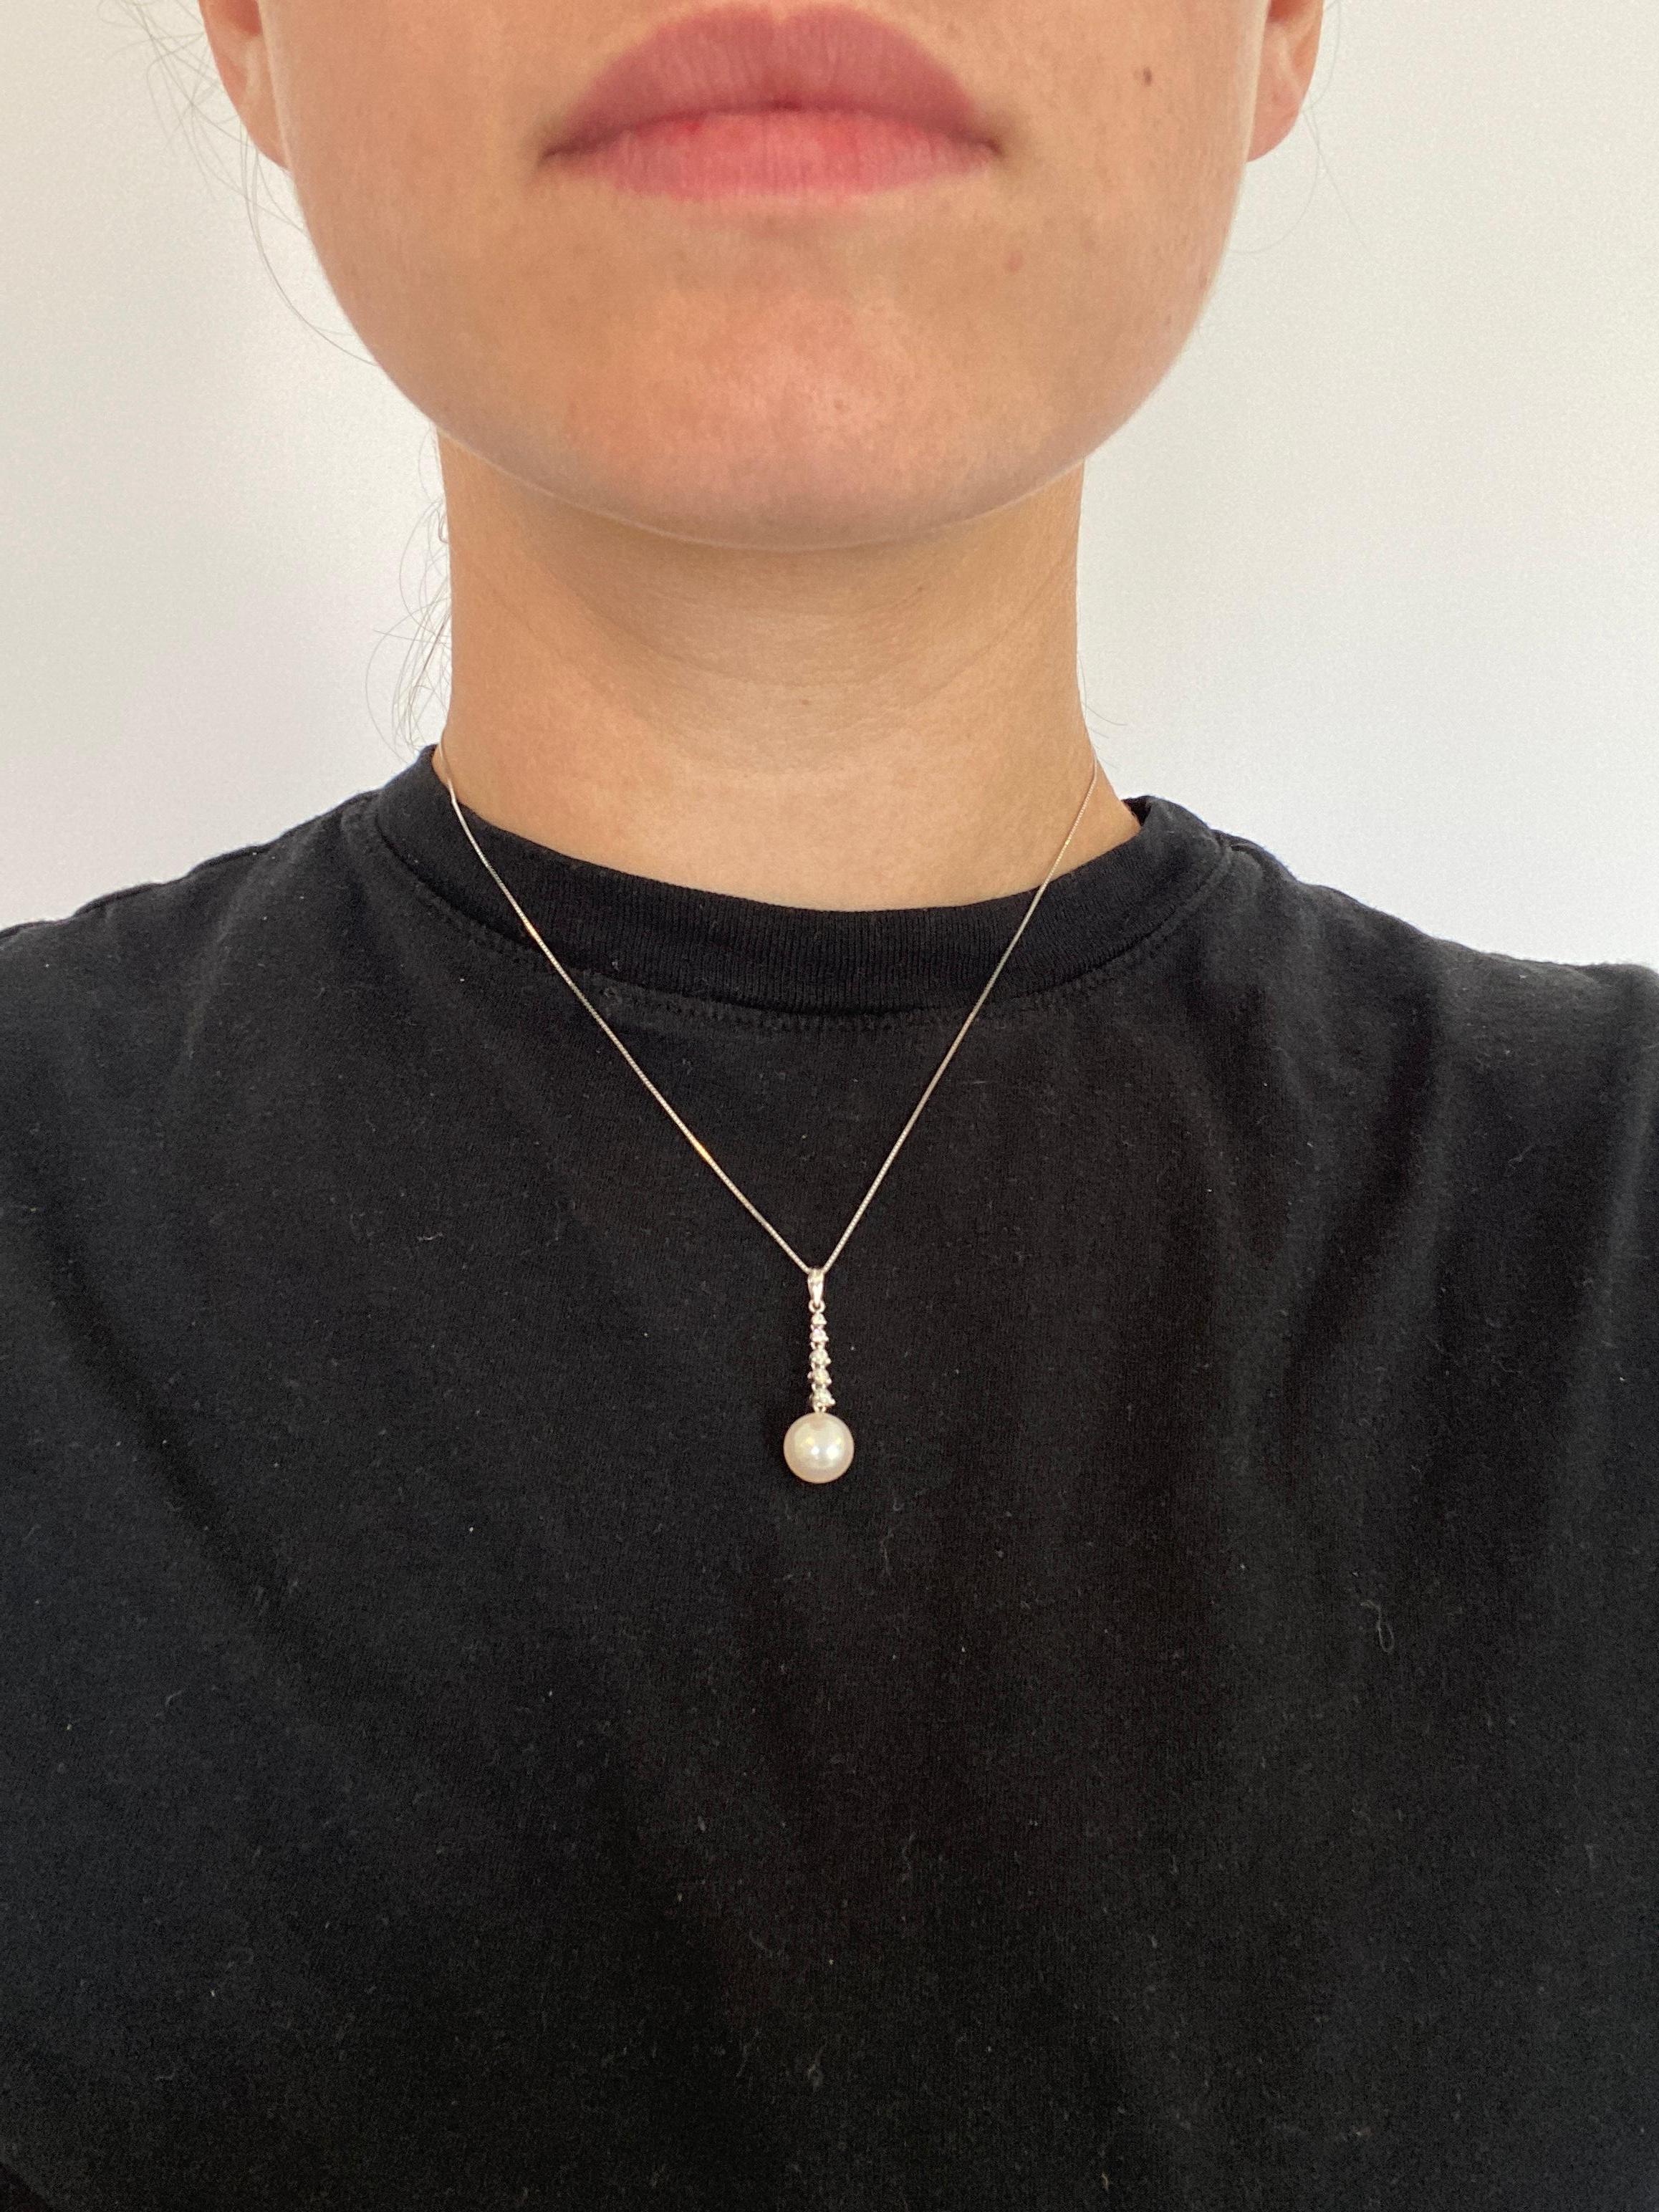 Women's or Men's Pearl Diamond Pendant Necklace, 14K White Gold